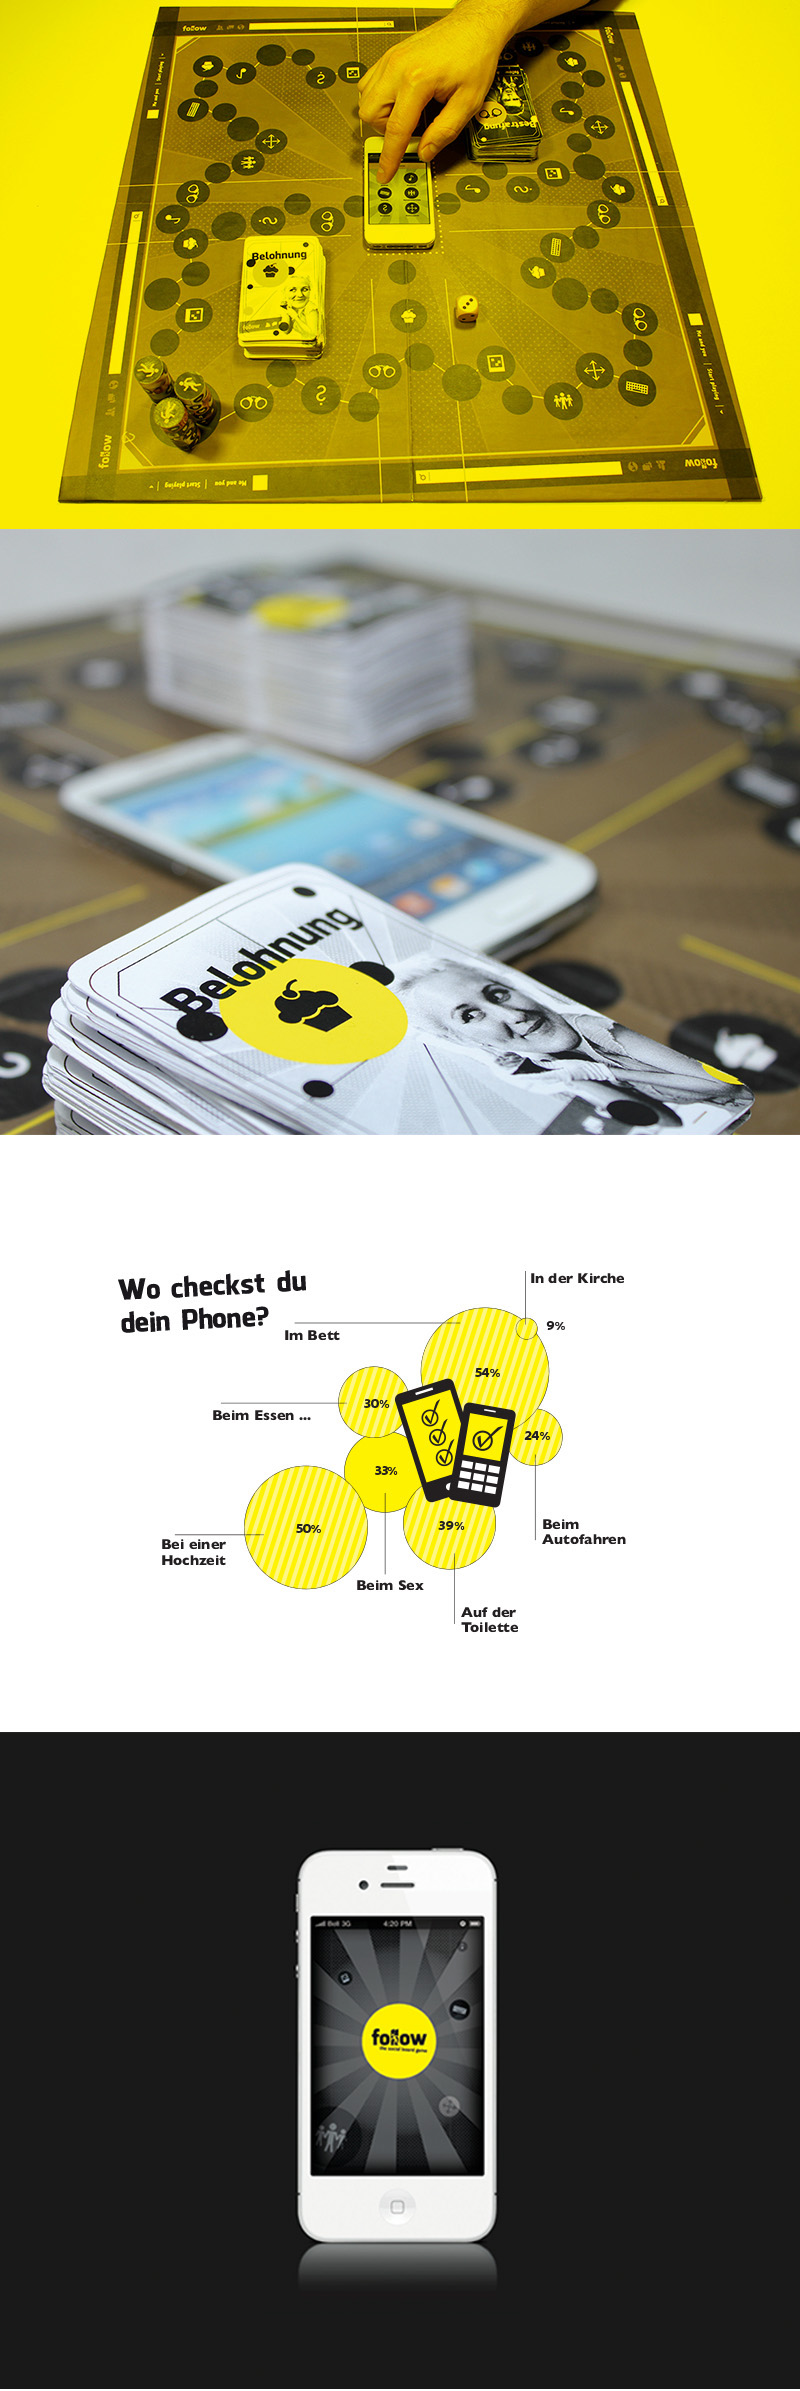 follow  social   board  game   diploma  yellow  Black  Play  toy  social network  FACEBOOK  package  box  screen printing media